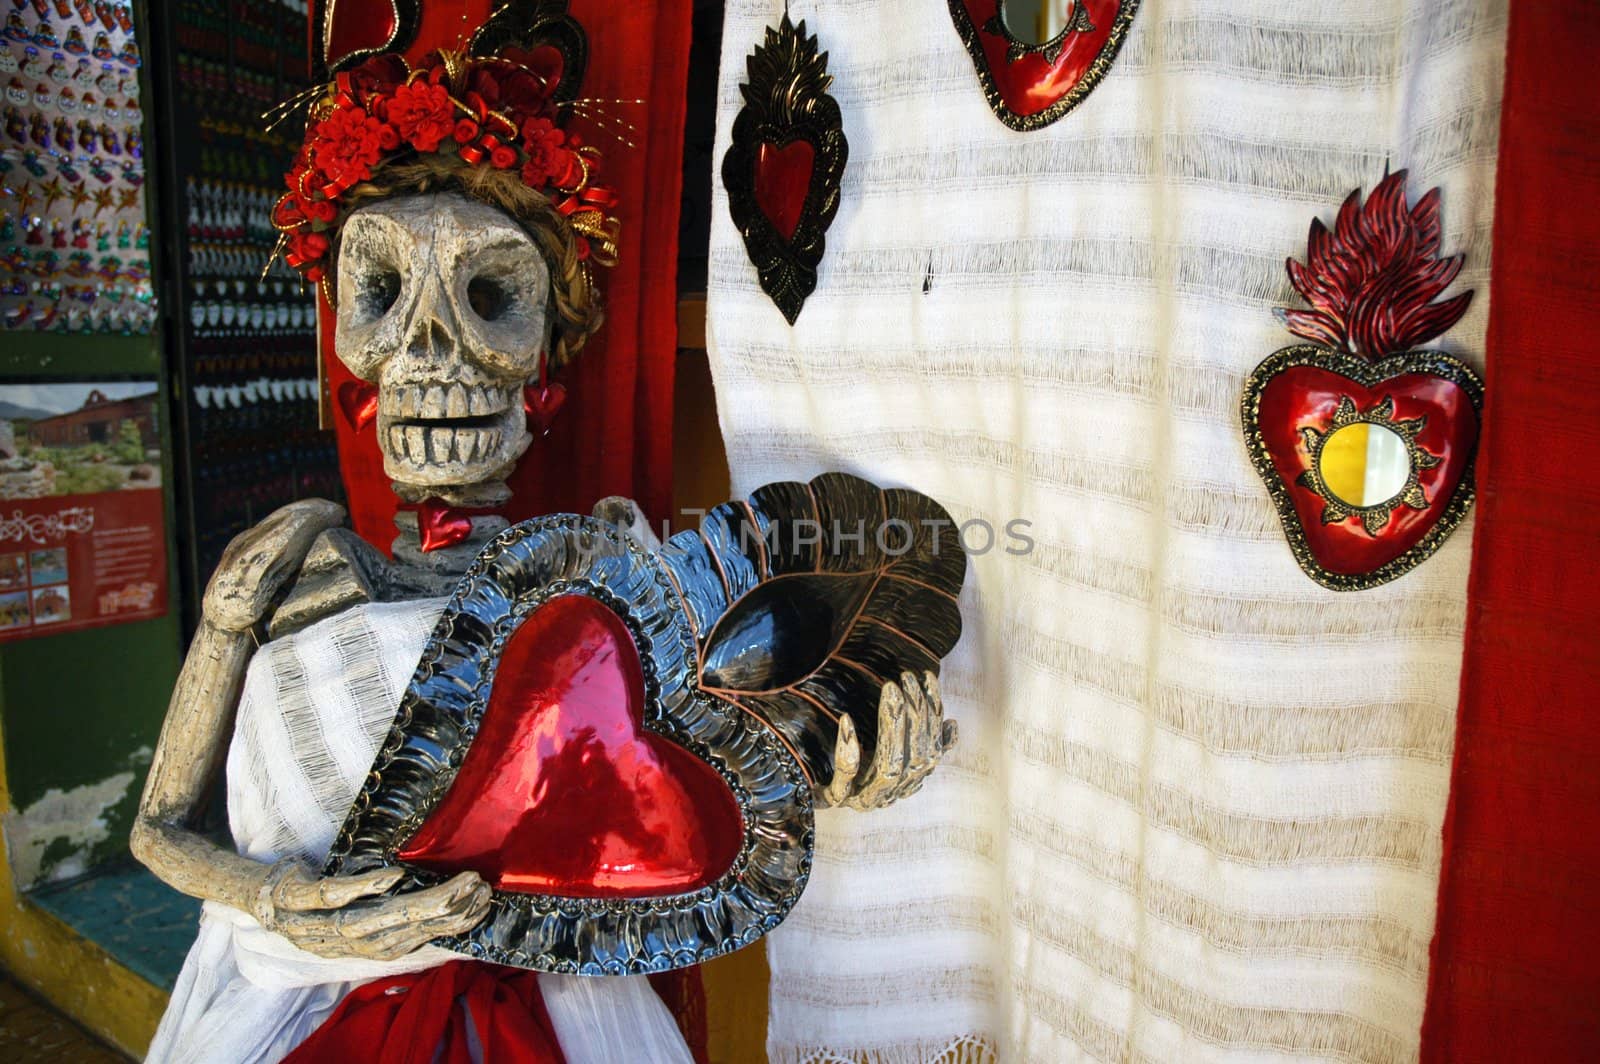 Souvenirs in Oaxaca Mexico by haak78